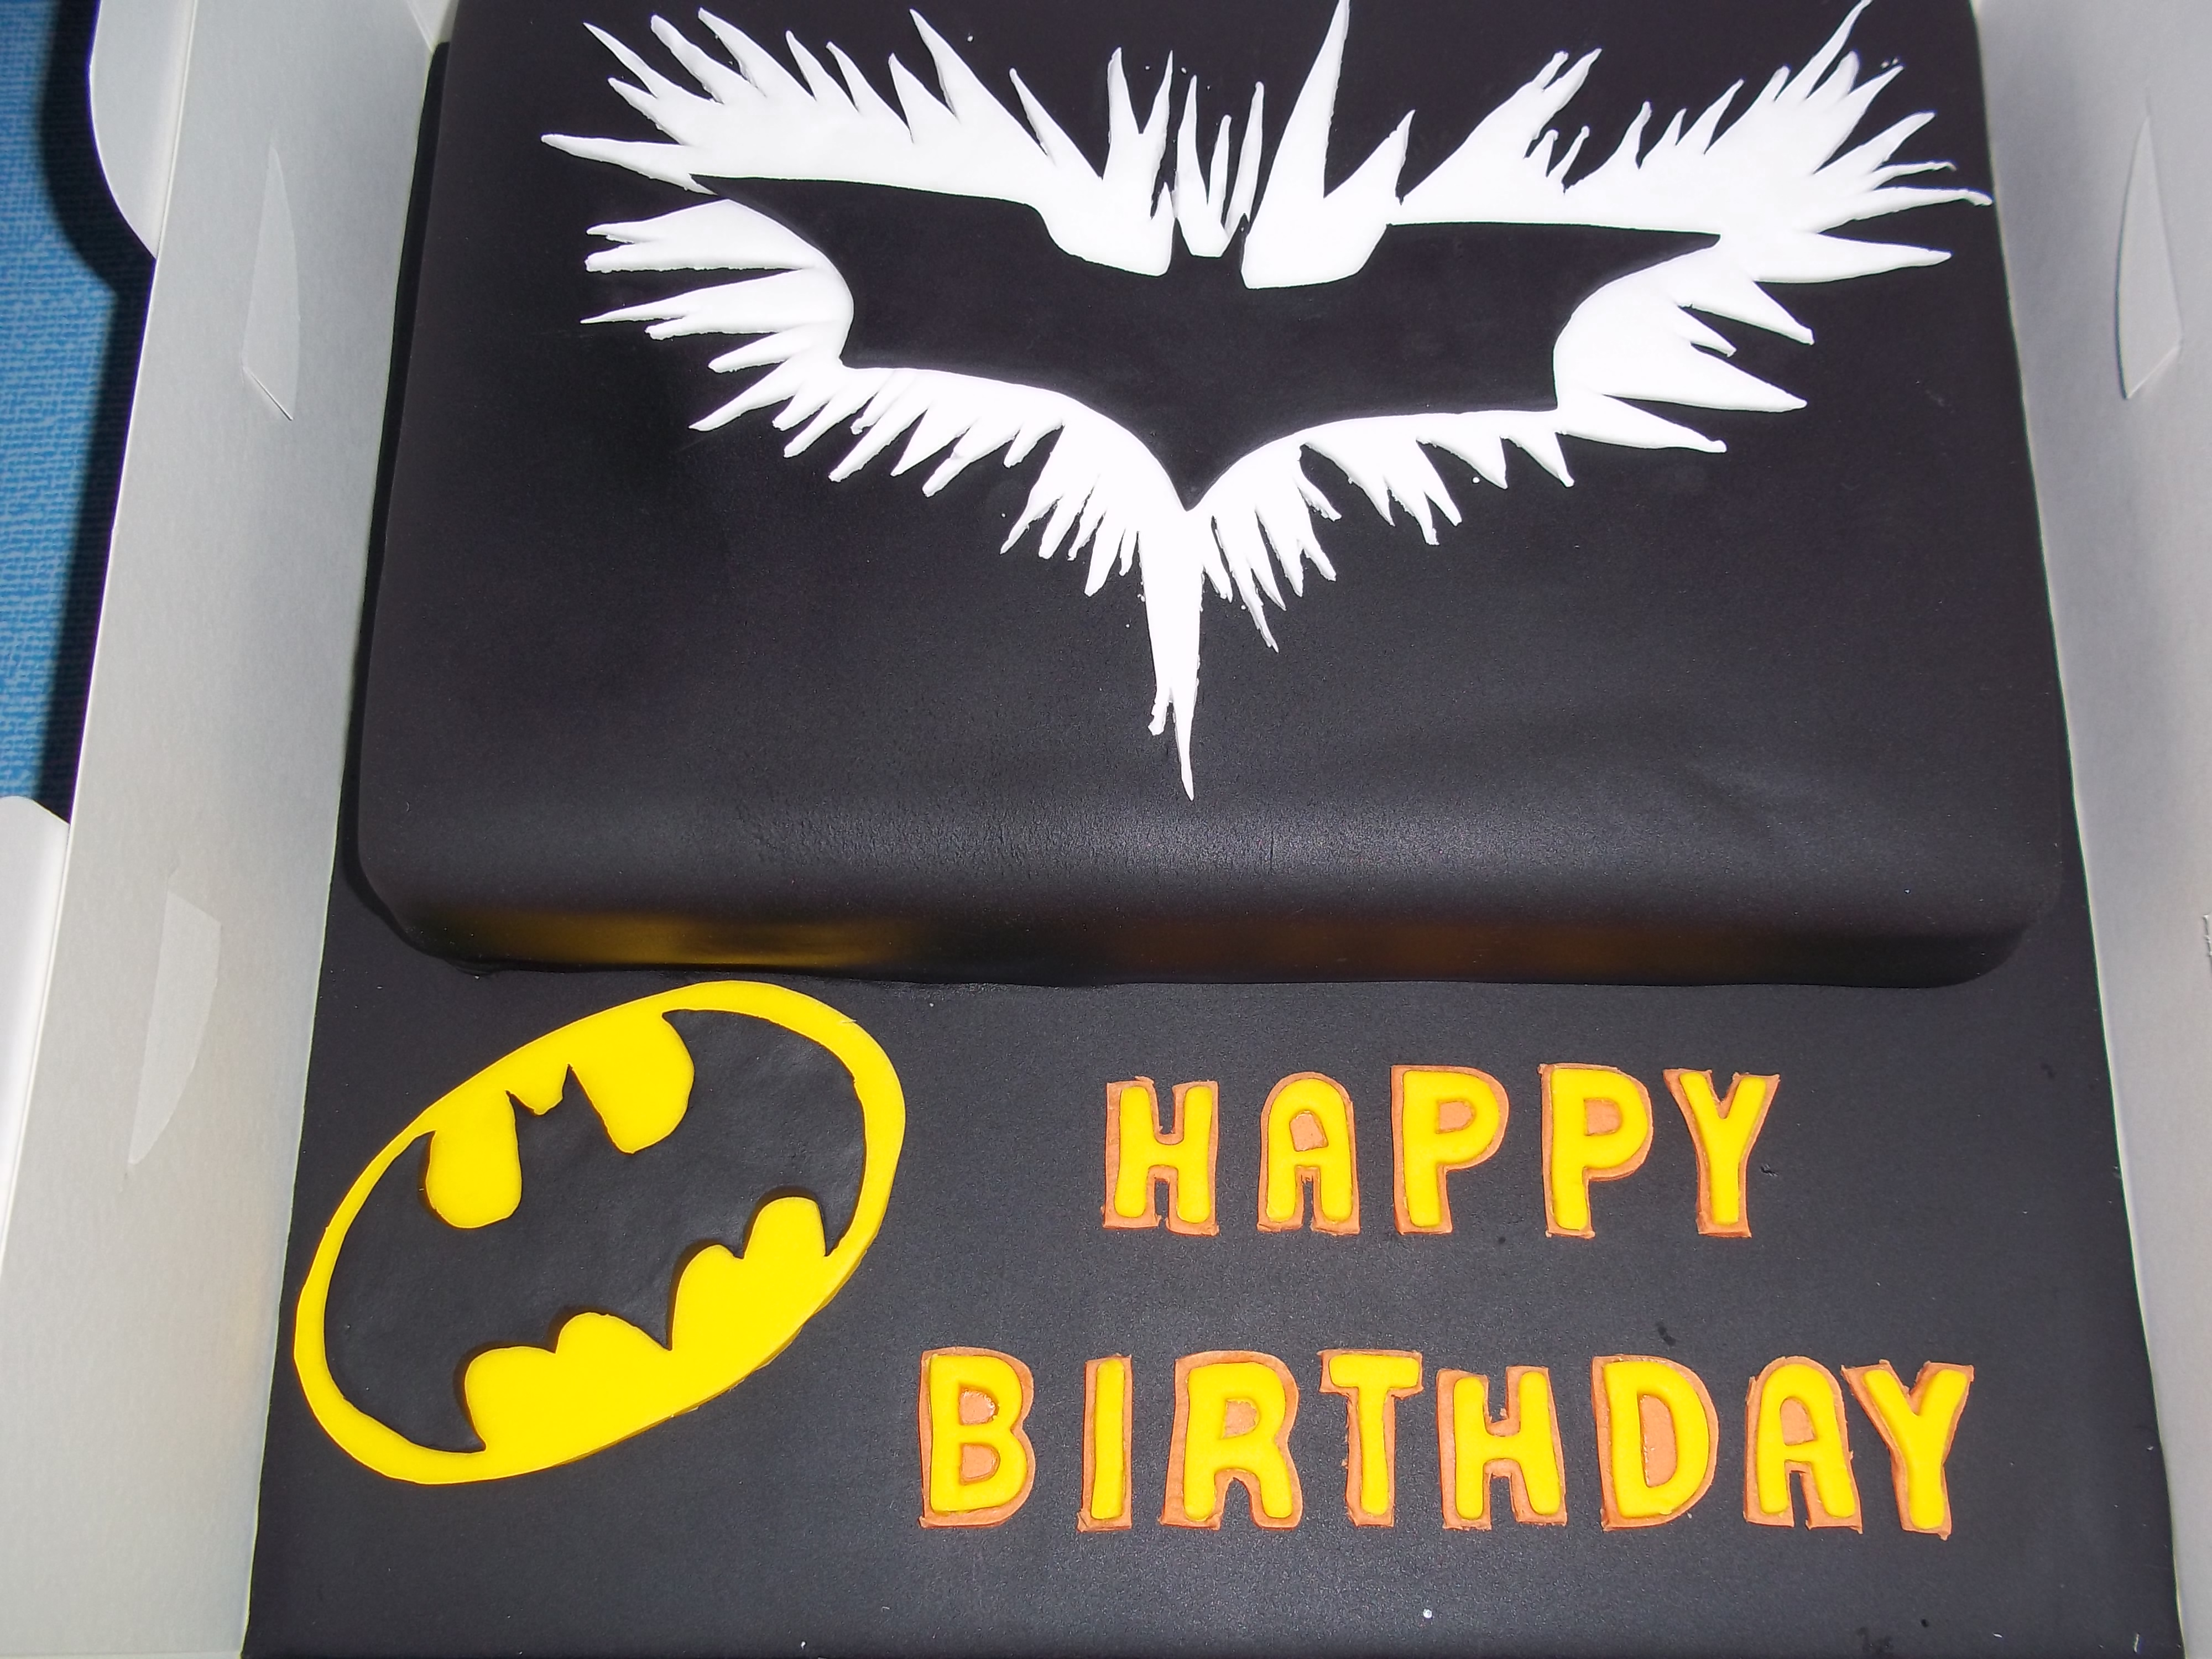 Batman Birthday Cake